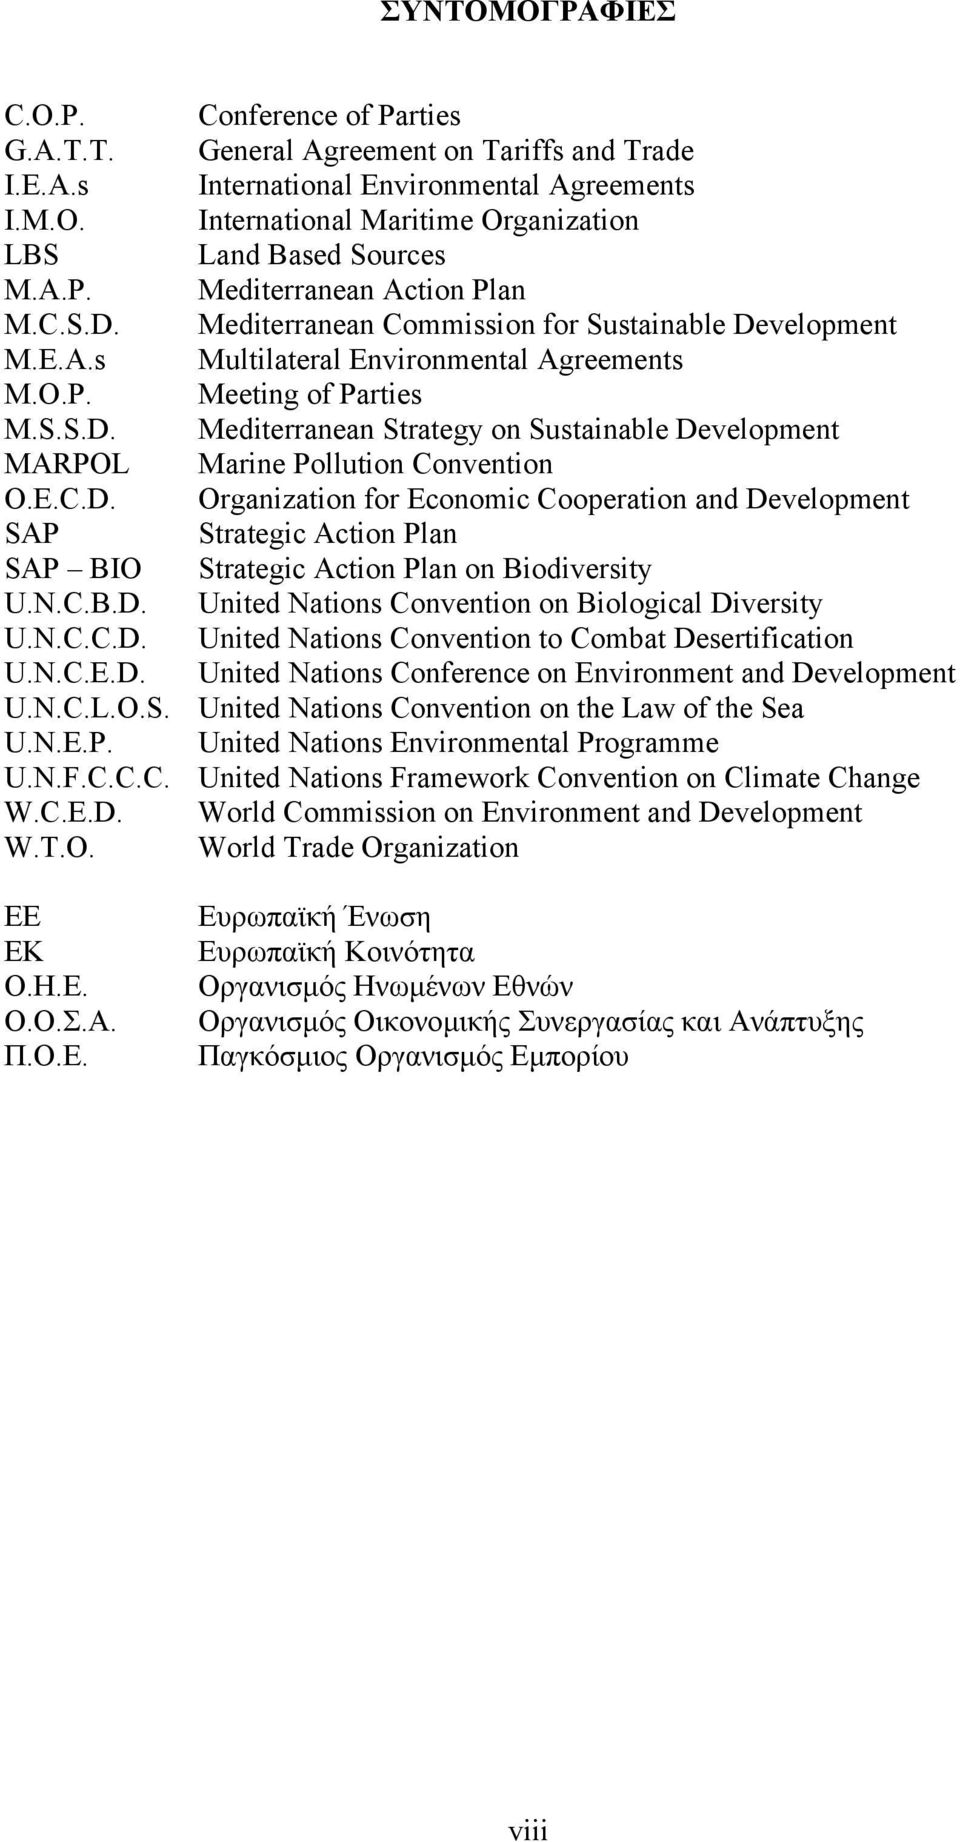 E.C.D. Organization for Economic Cooperation and Development SAP Strategic Action Plan SAP BIO Strategic Action Plan on Biodiversity U.N.C.B.D. United Nations Convention on Biological Diversity U.N.C.C.D. United Nations Convention to Combat Desertification U.